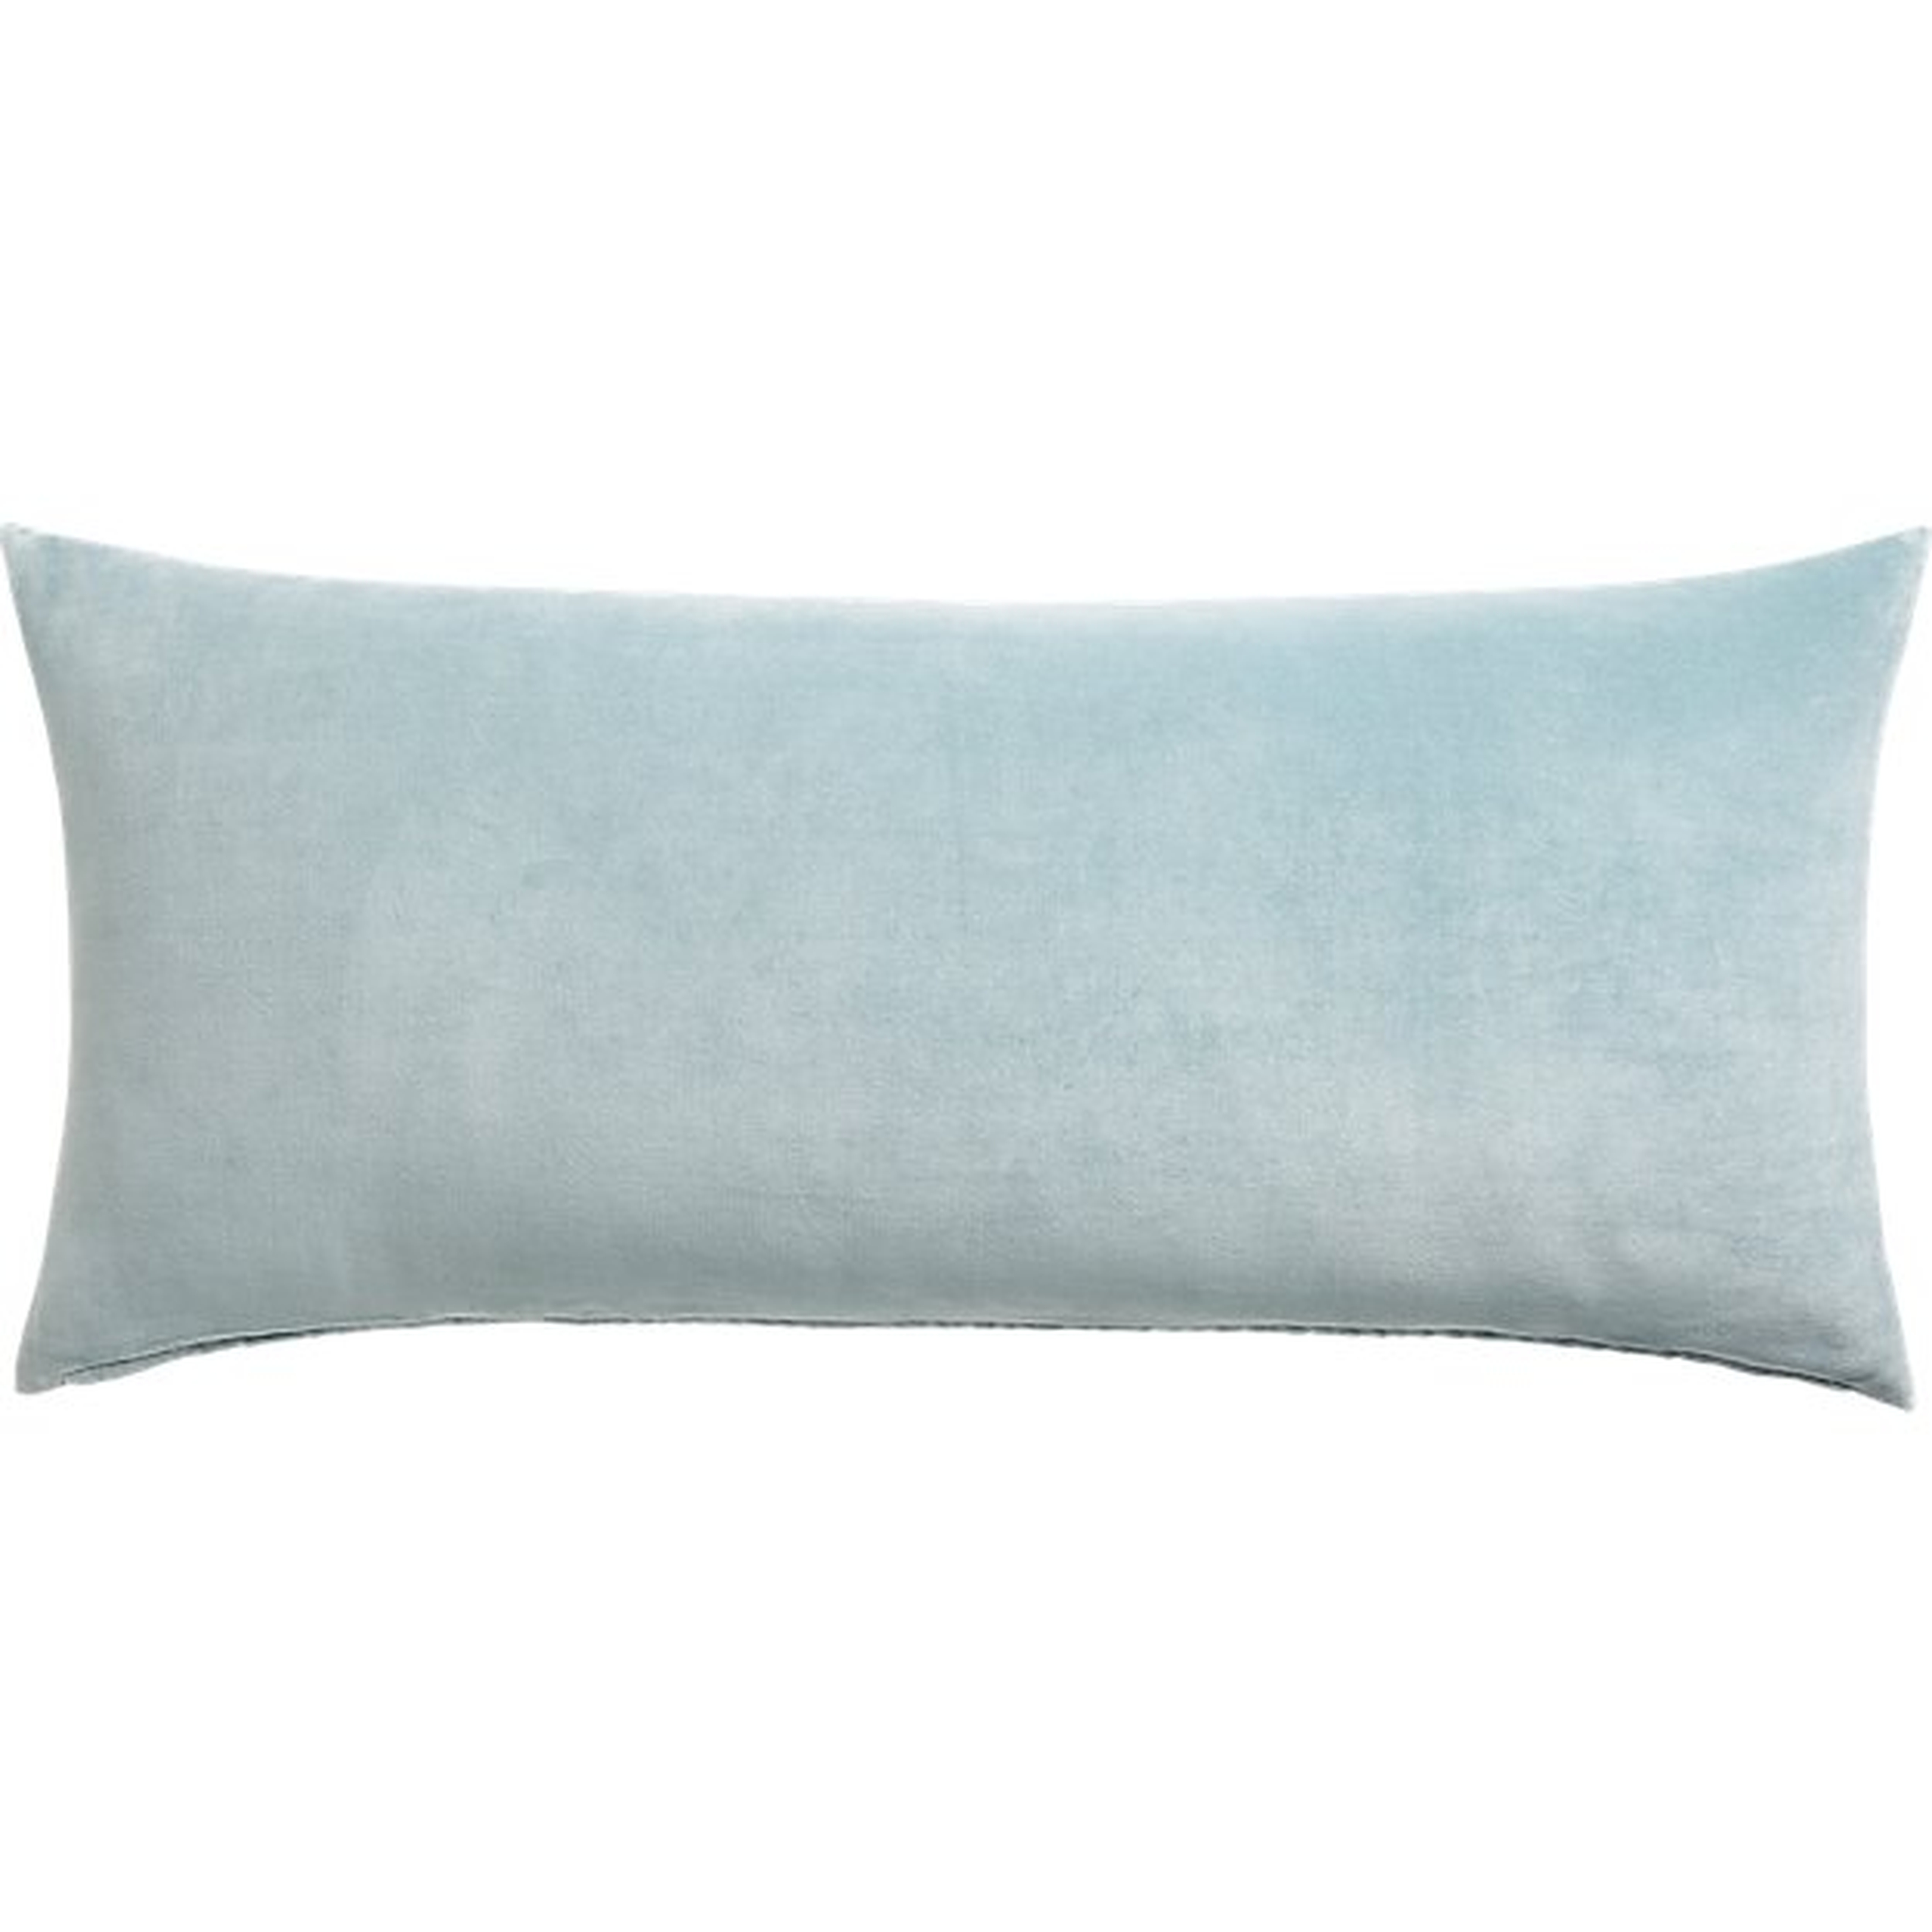 36"x16" leisure artic blue pillow - CB2